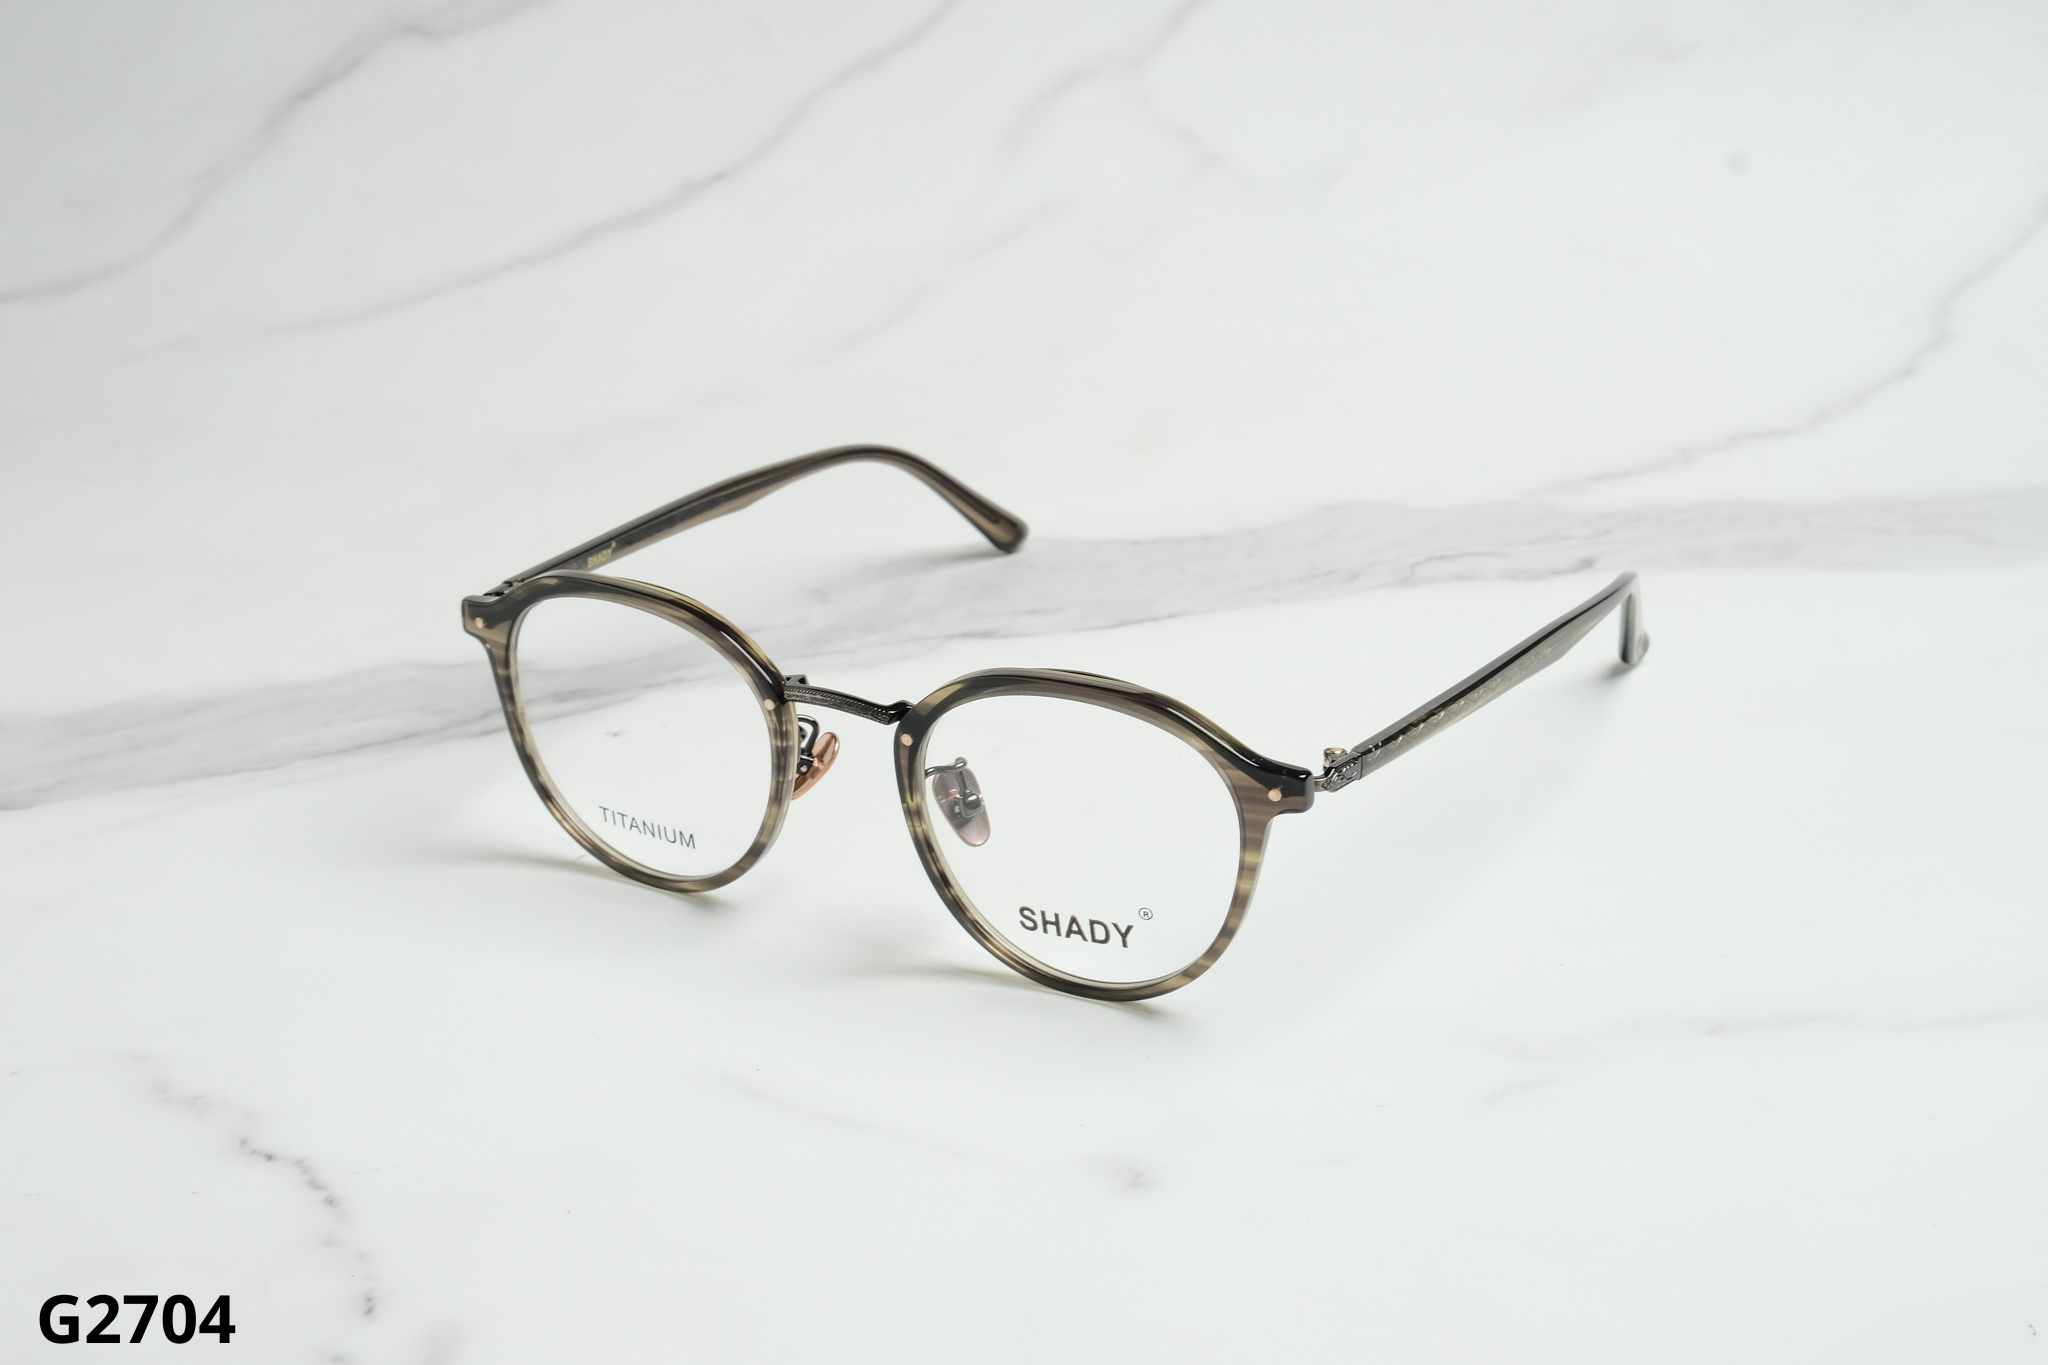  SHADY Eyewear - Glasses - G2704 